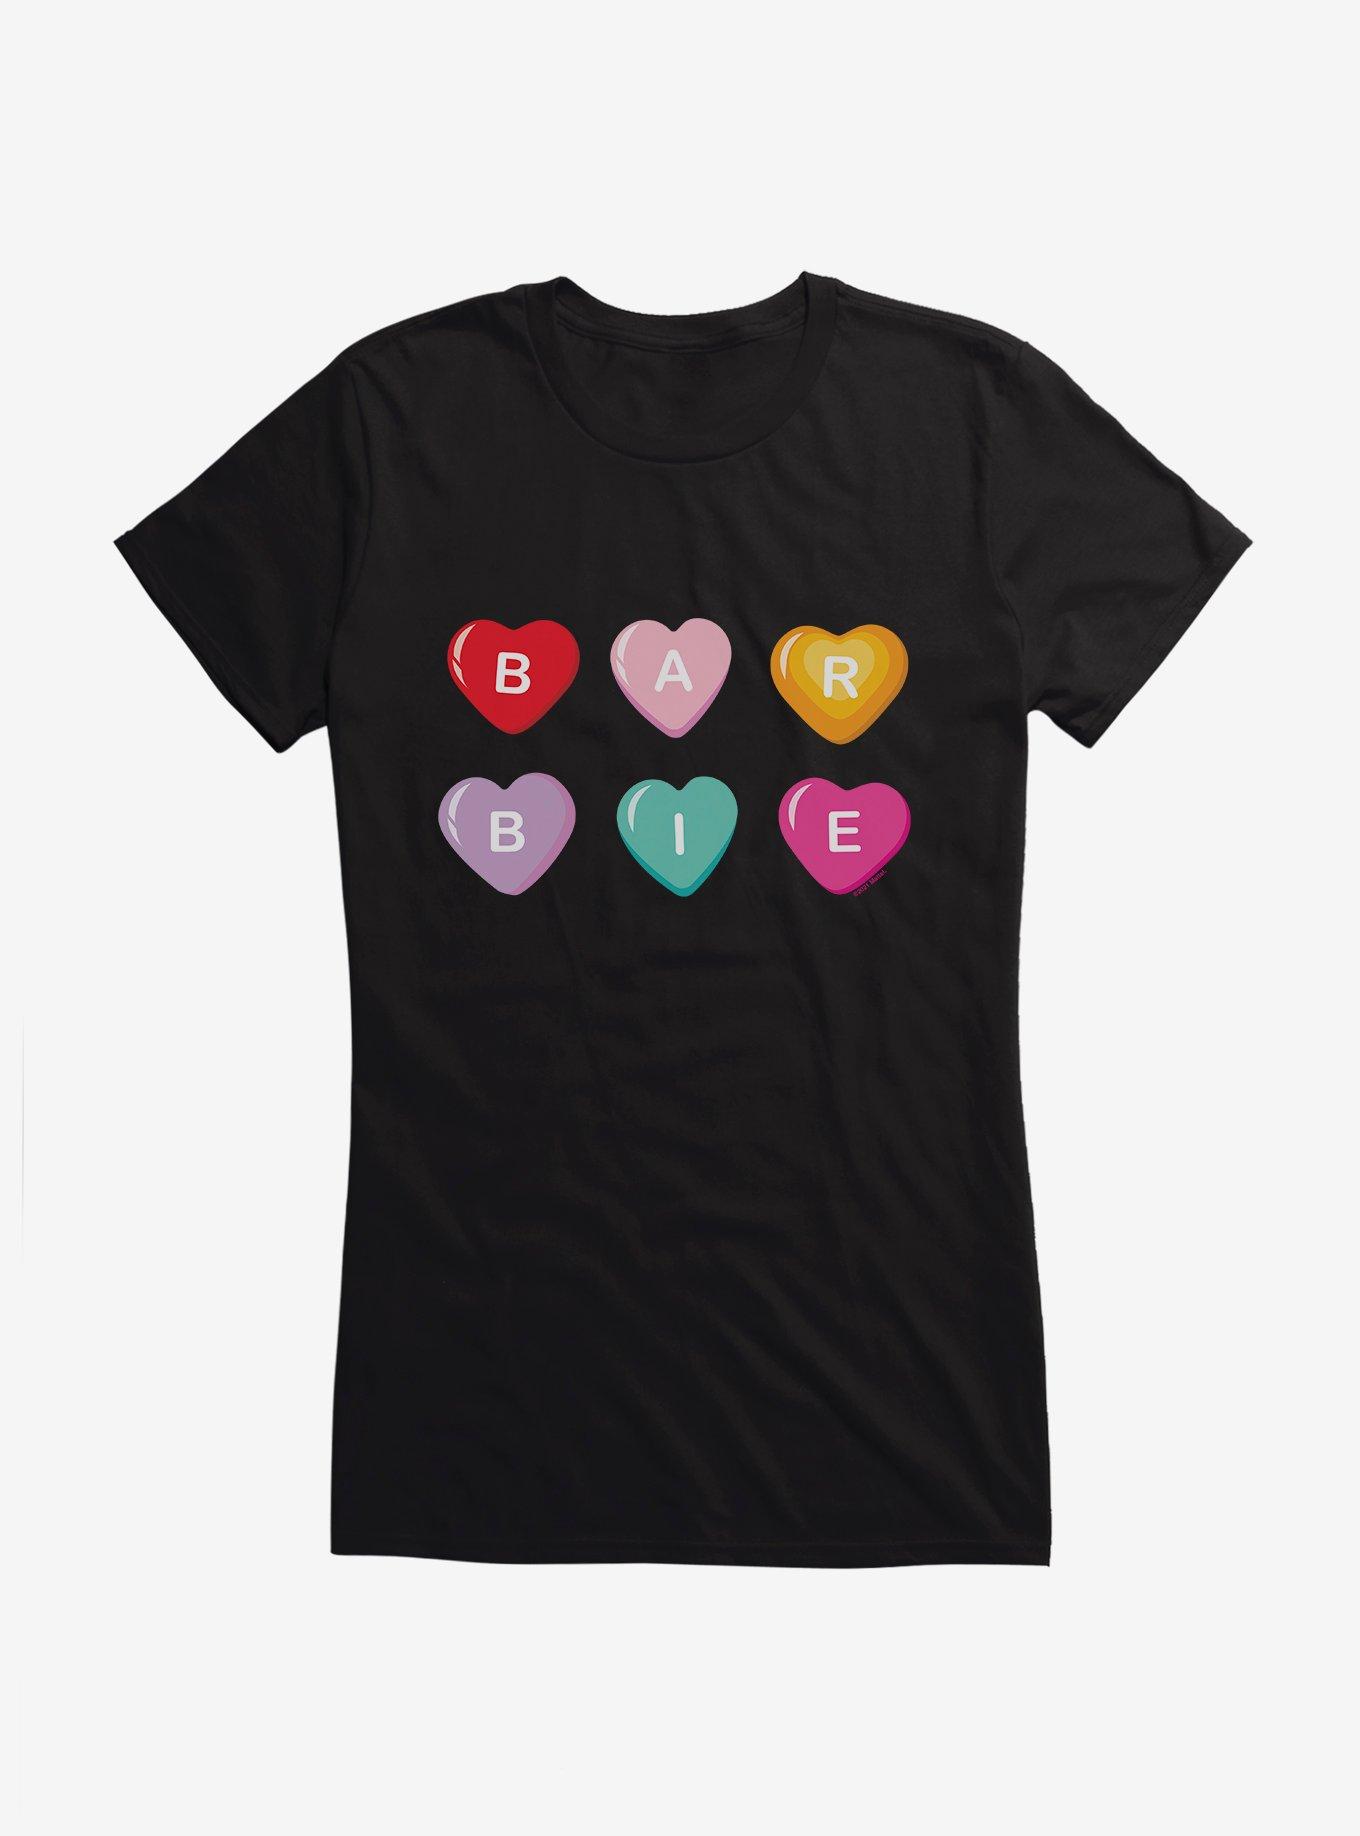 Barbie Valentine's Day Candy Heart Girls T-Shirt